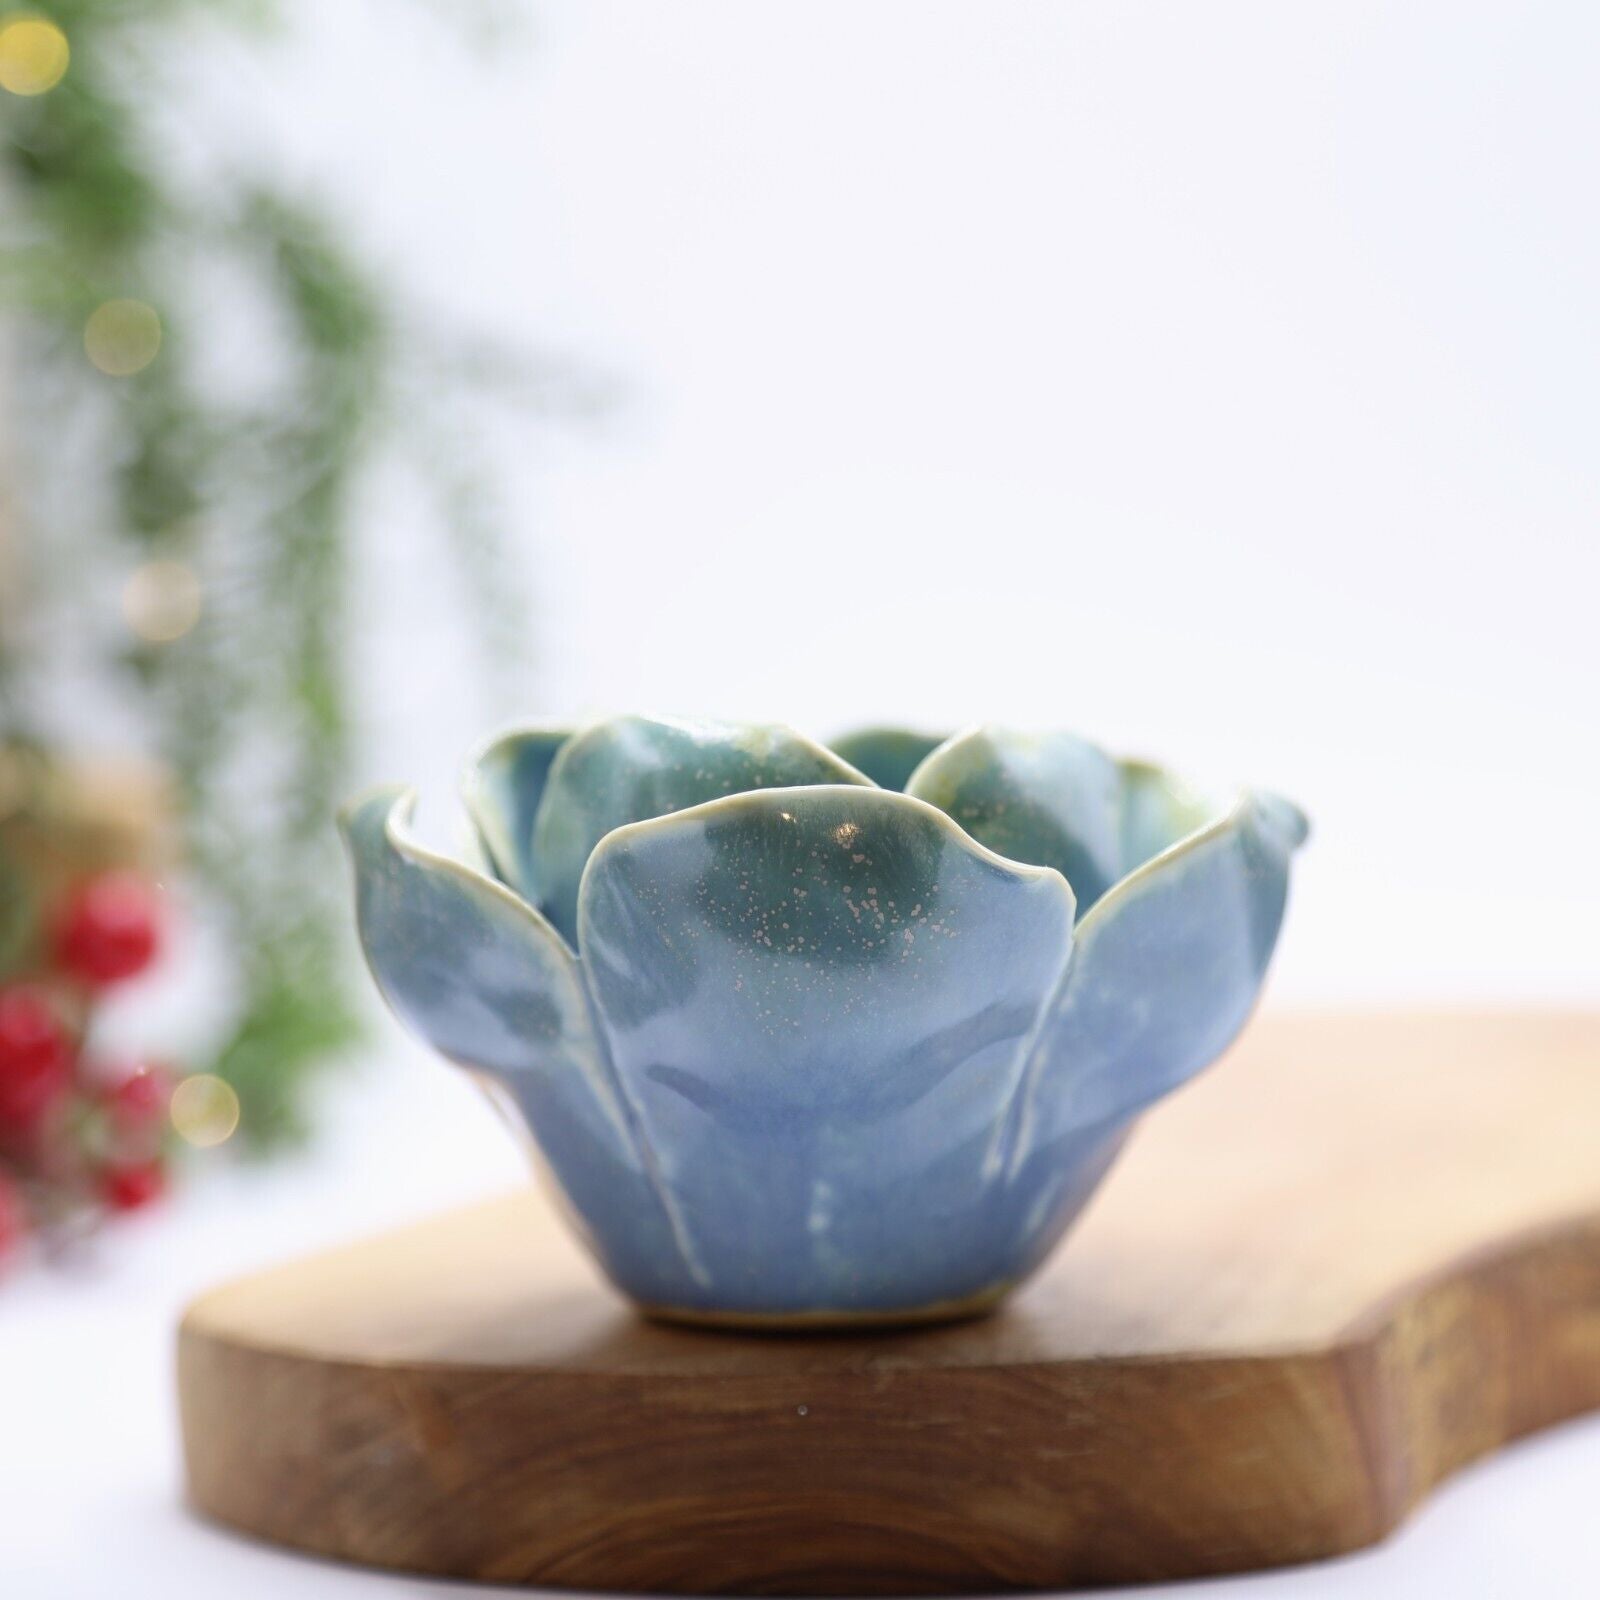 Reactive Glazed Ceramic Flower Tealight Candles Holders Petals Christmas Decor